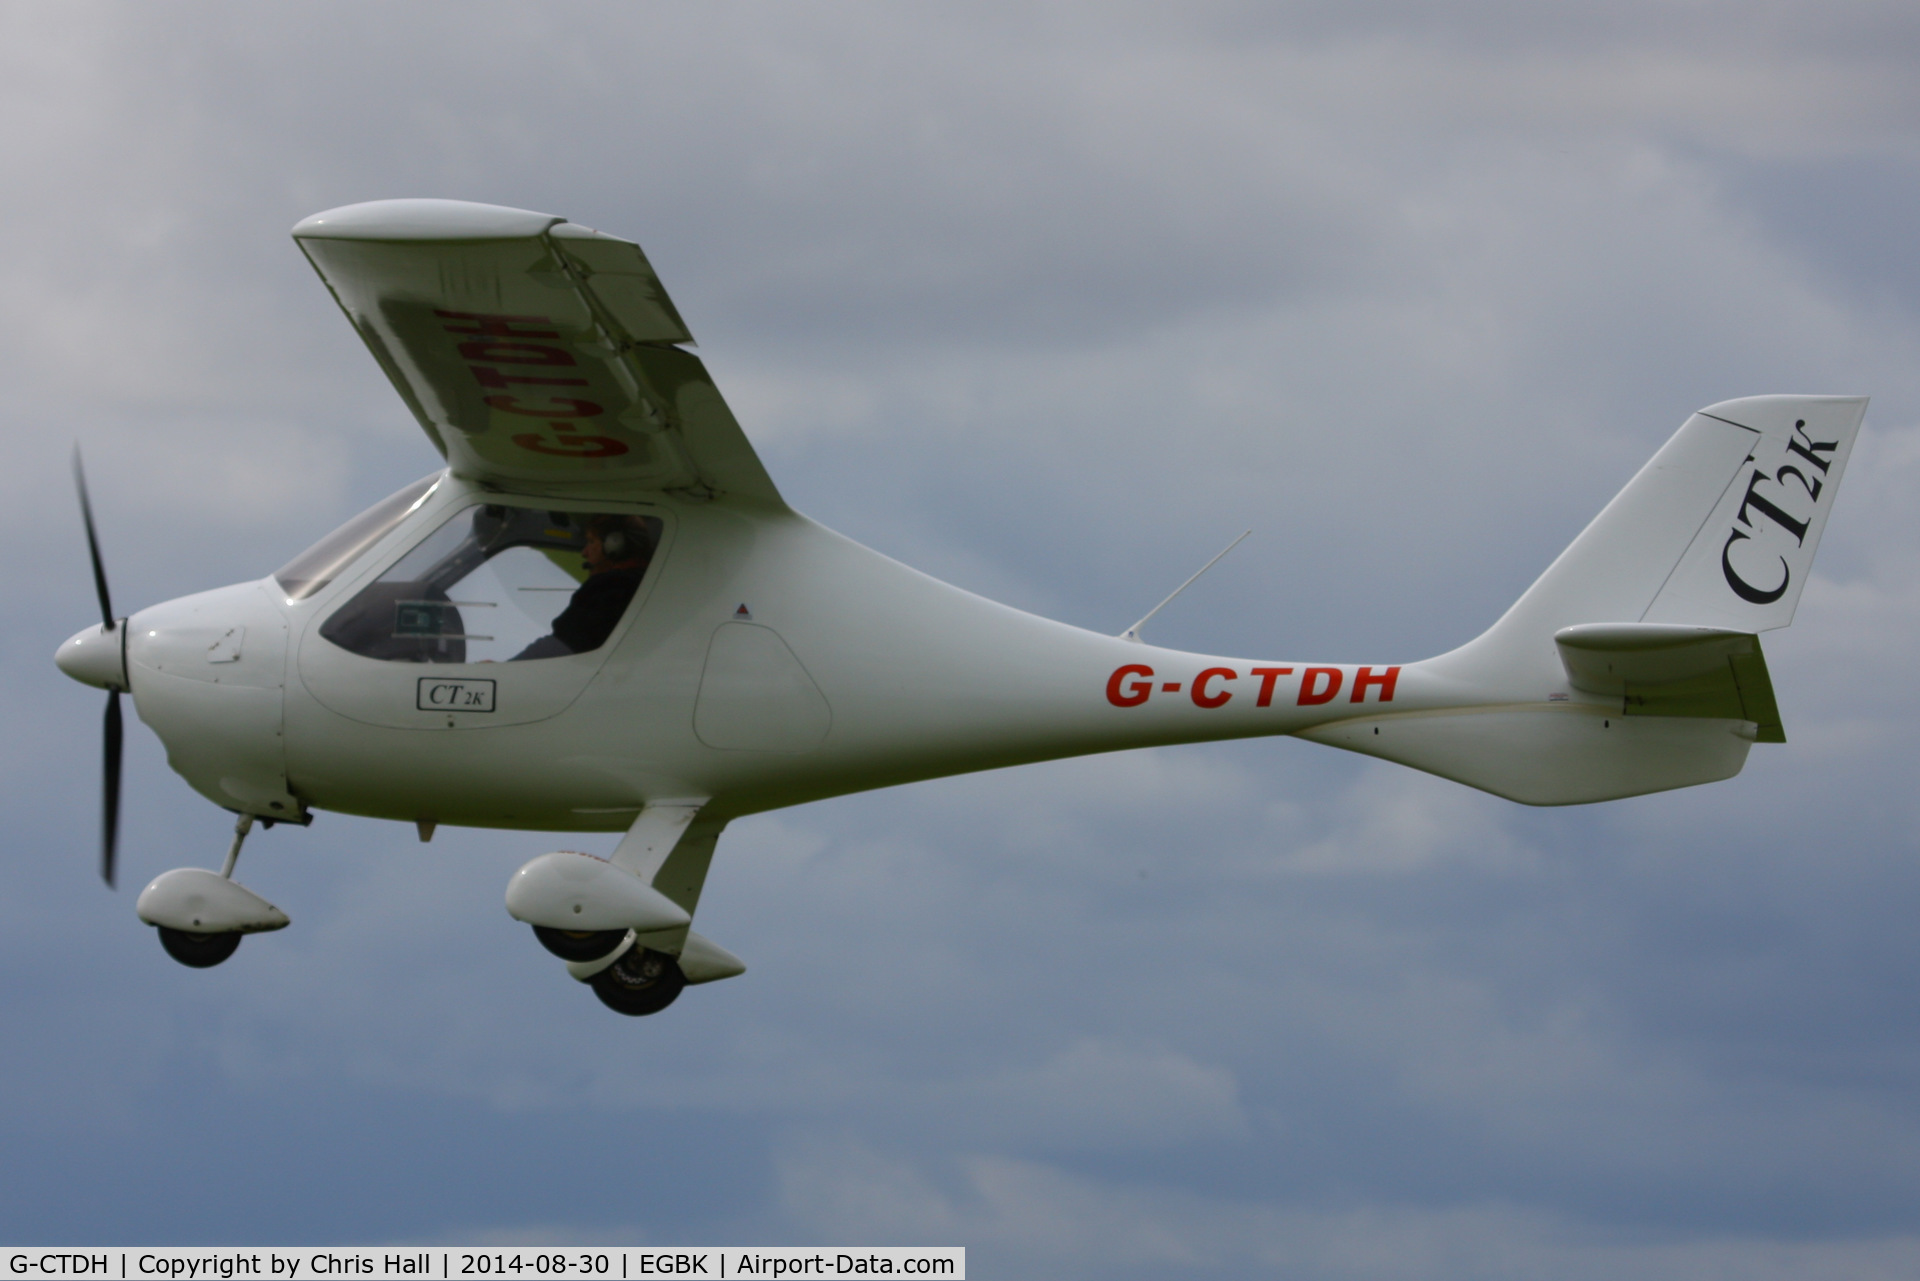 G-CTDH, 2003 Flight Design CT2K C/N 7939, at the LAA Rally 2014, Sywell